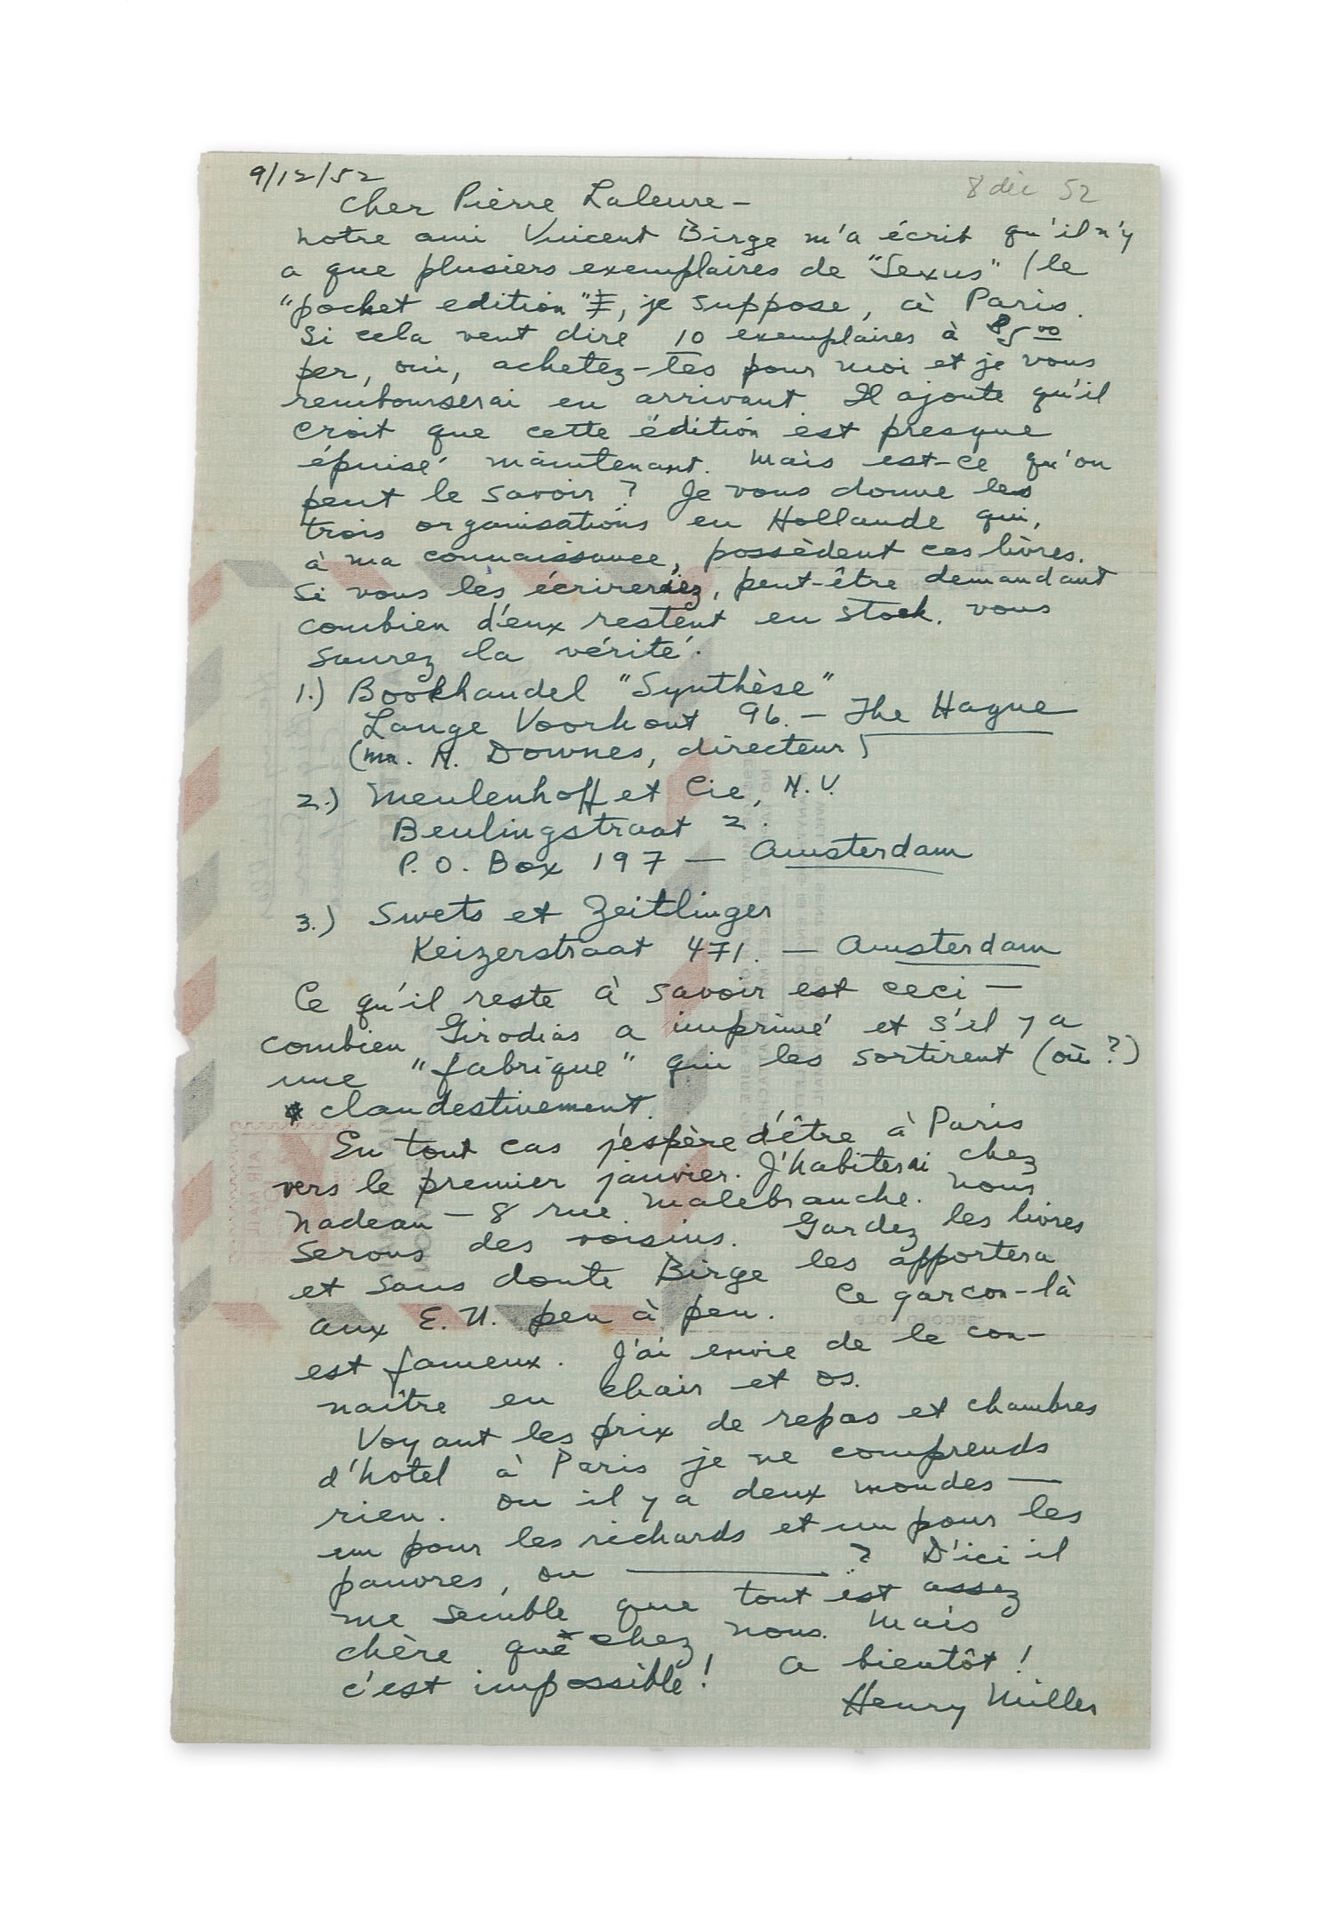 MILLER, Henry 签署给一个朋友的亲笔信。大苏尔，1962年12月9日。

一页请柬，内附地址。

"我们的朋友文森特-比尔吉写信给我说，《性爱》（"&hellip;